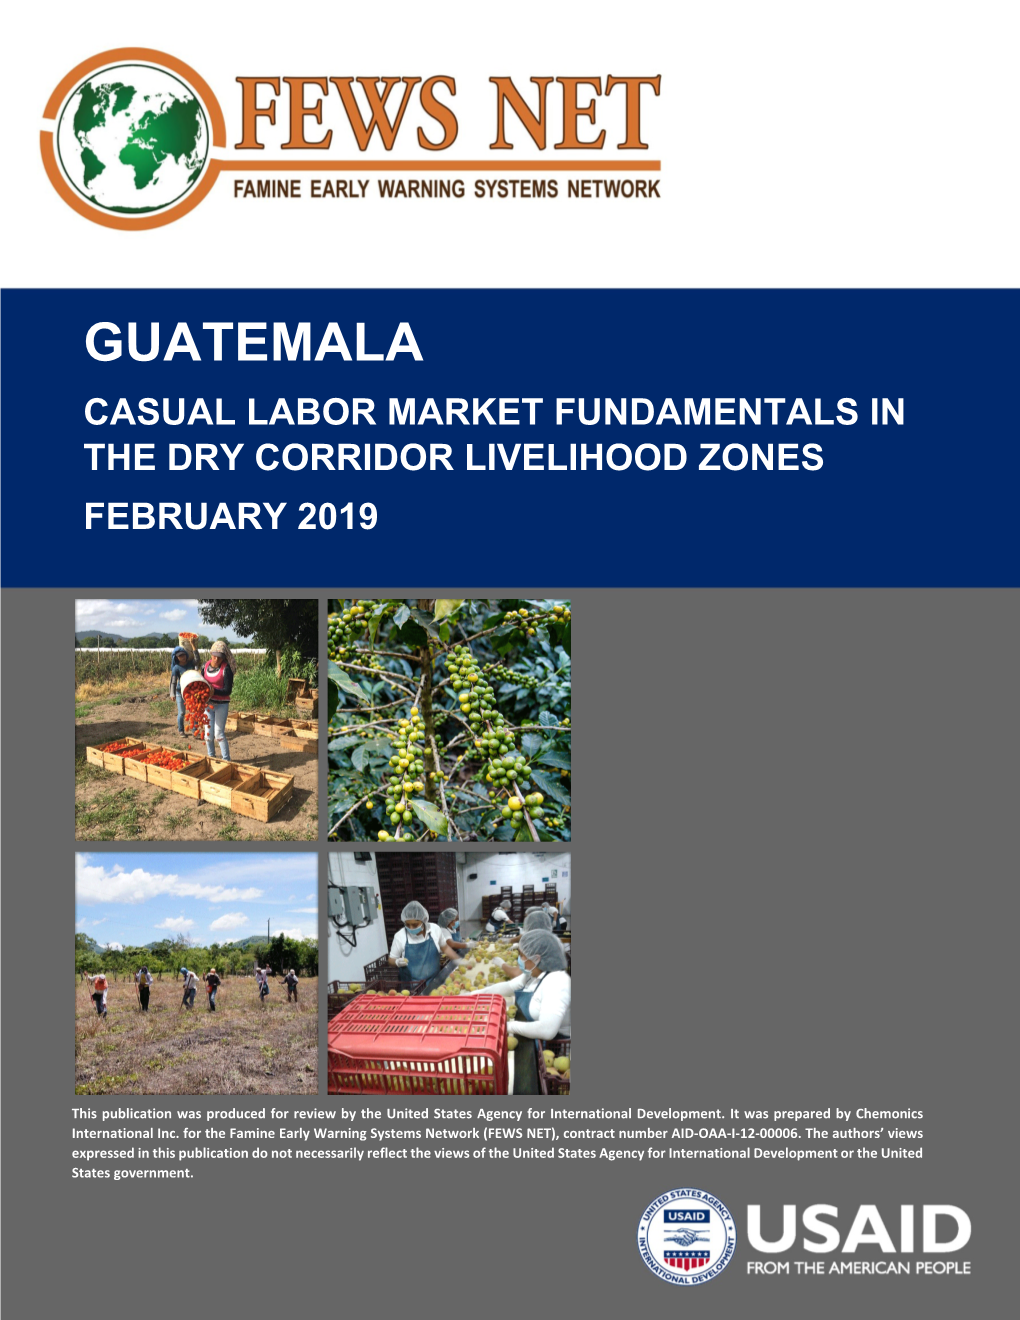 FEWS NET Guatemala Casual Labor Market Fundamentals in the Dry Corridor Livelihood Zones Report February 2019